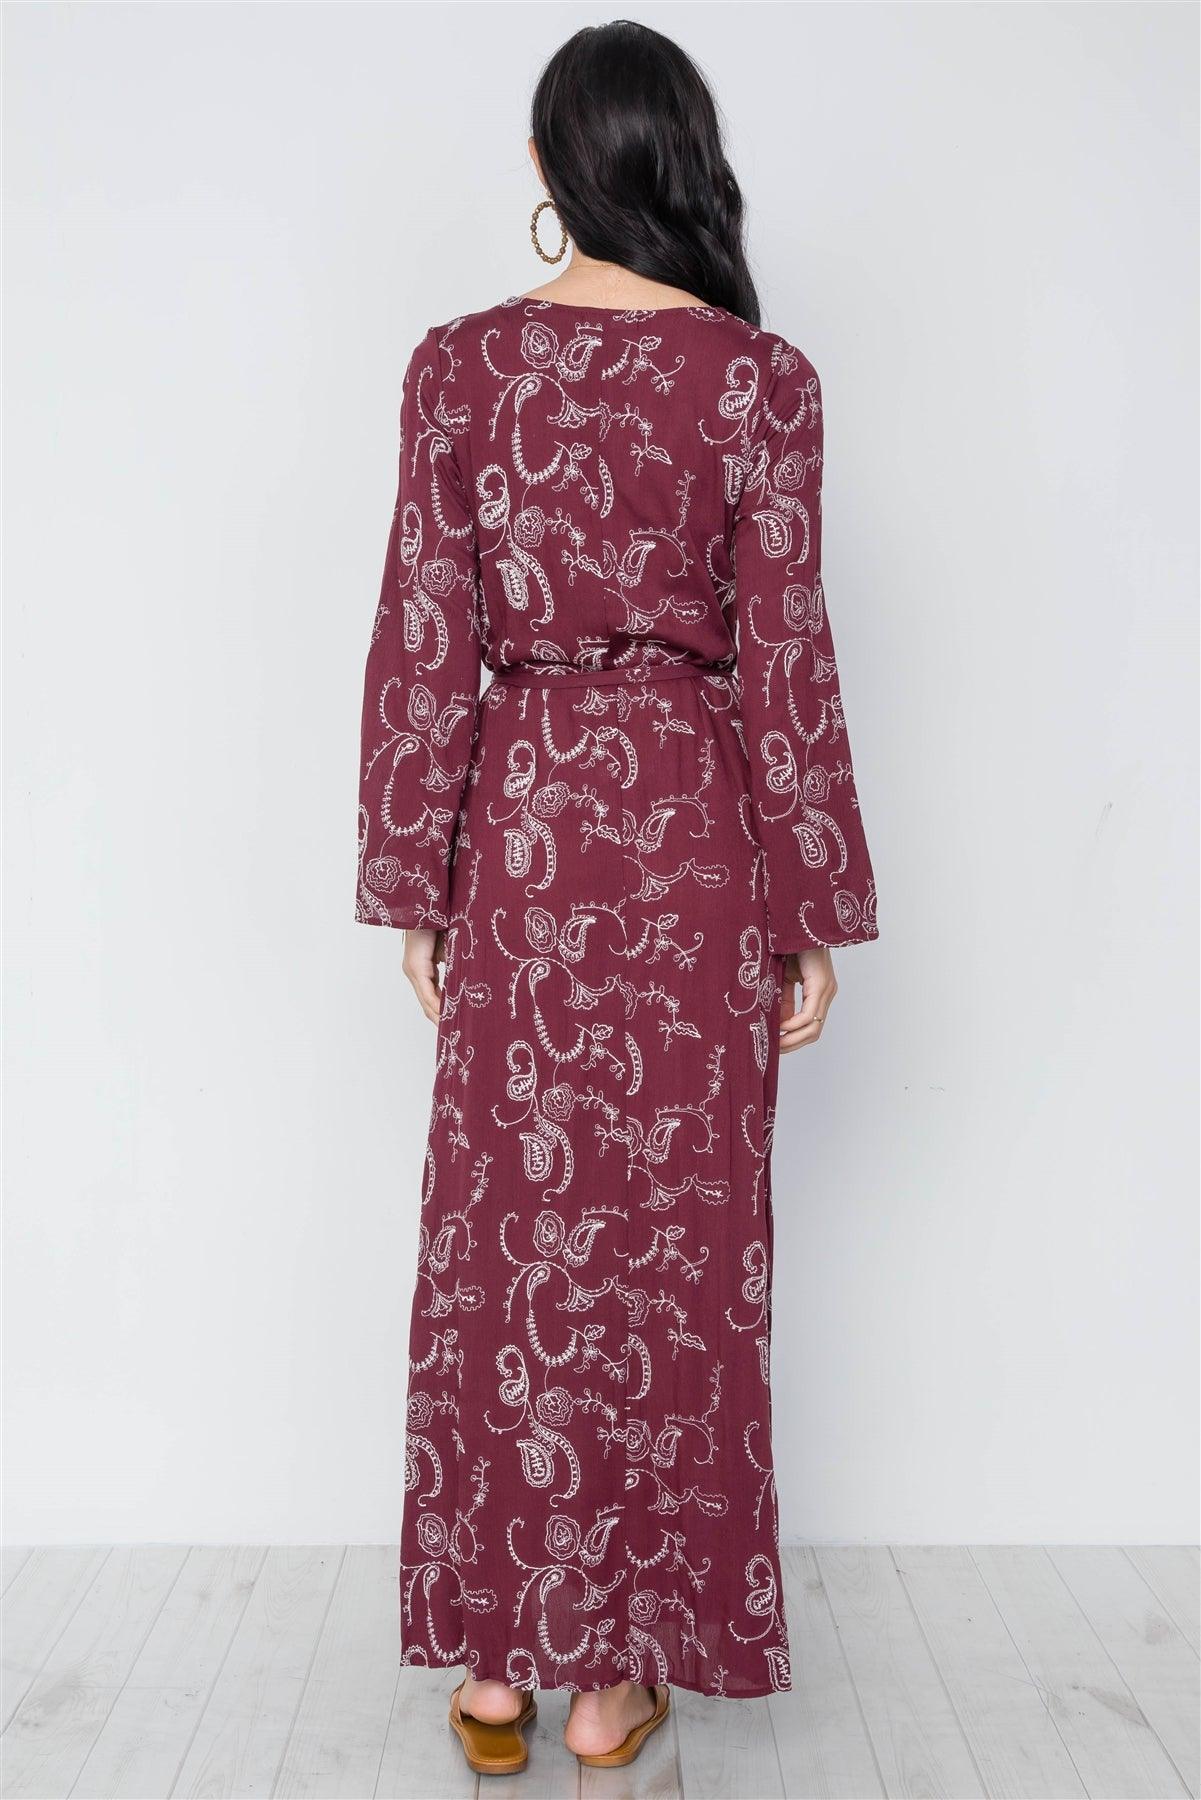 Burgundy Long Sleeve V-Neckline Floral Embroidery Boho Dress /3-2-1